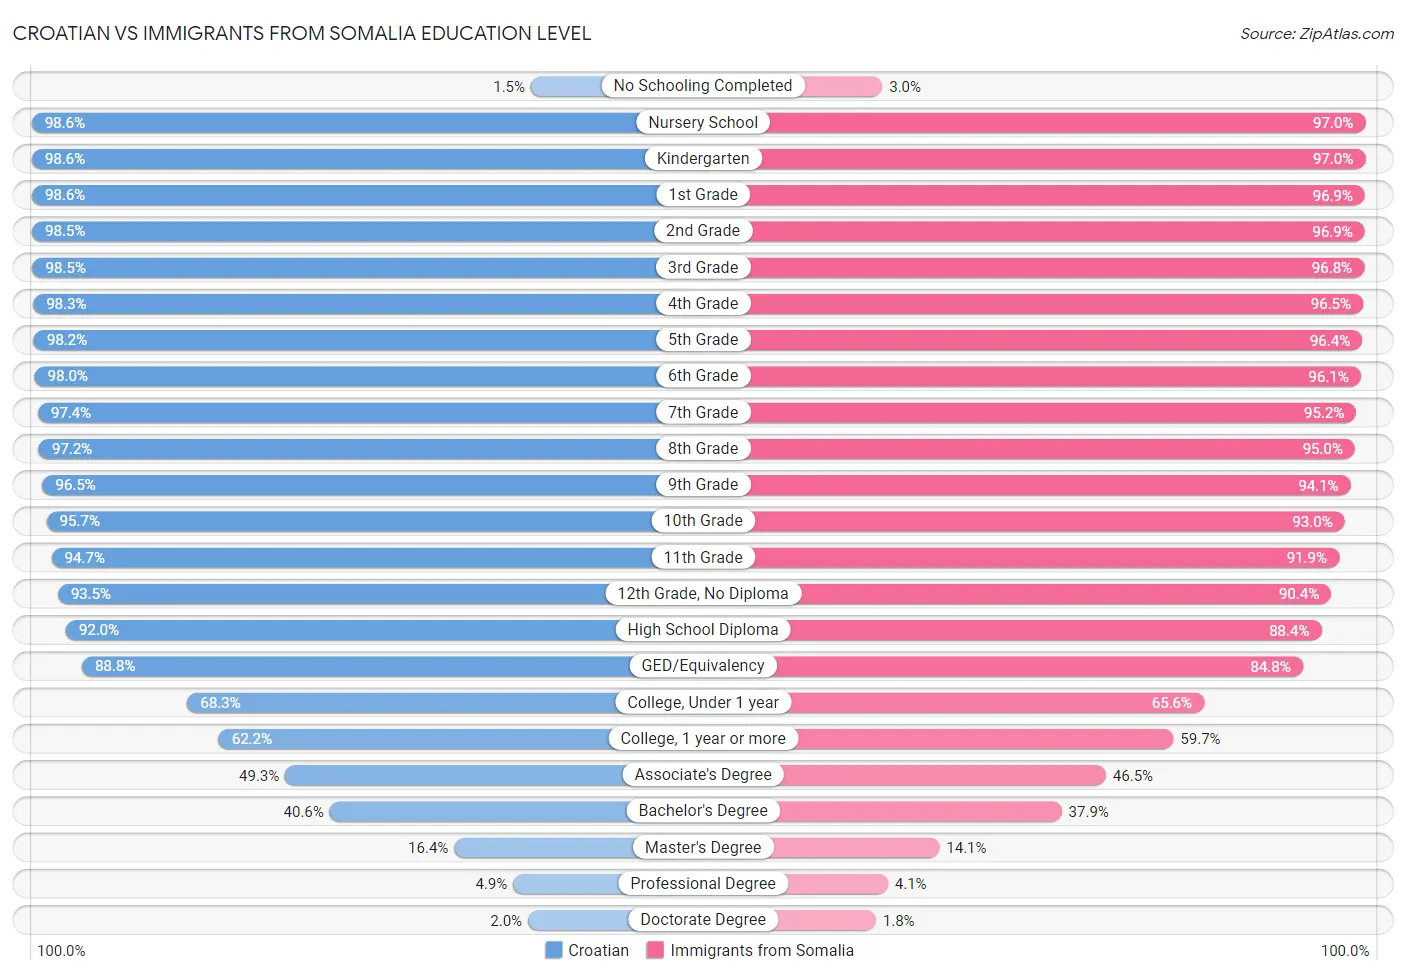 Croatian vs Immigrants from Somalia Education Level